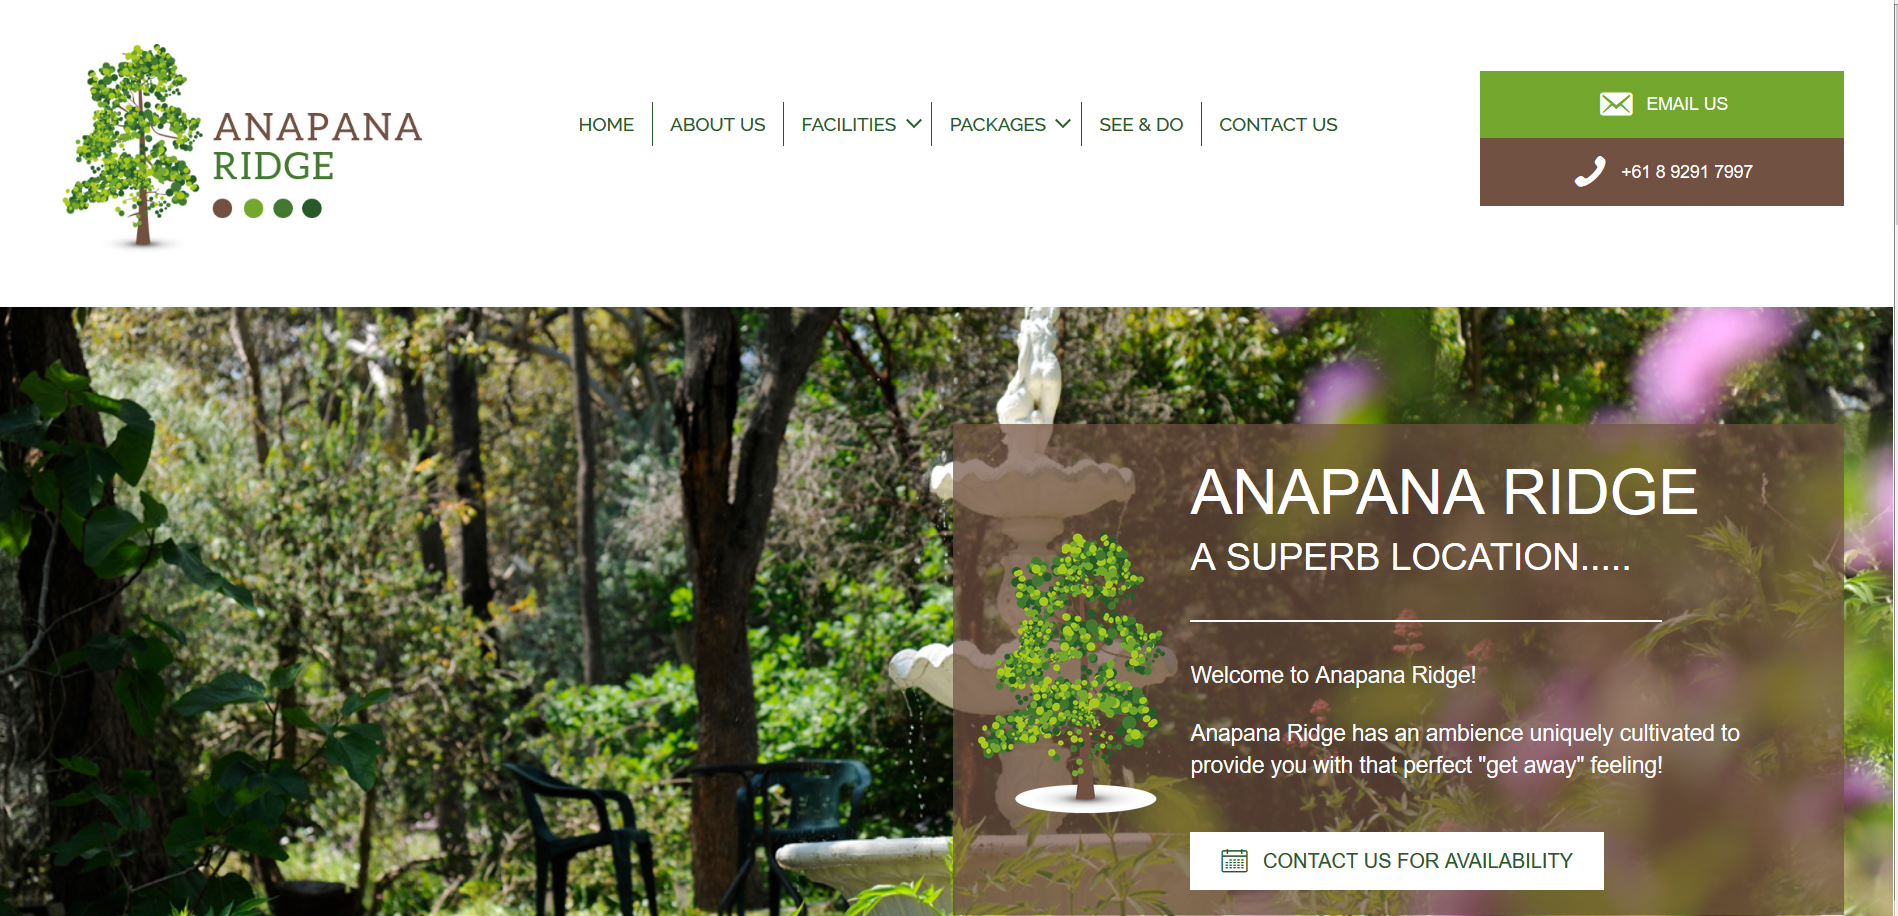 www.anapanaridge.com